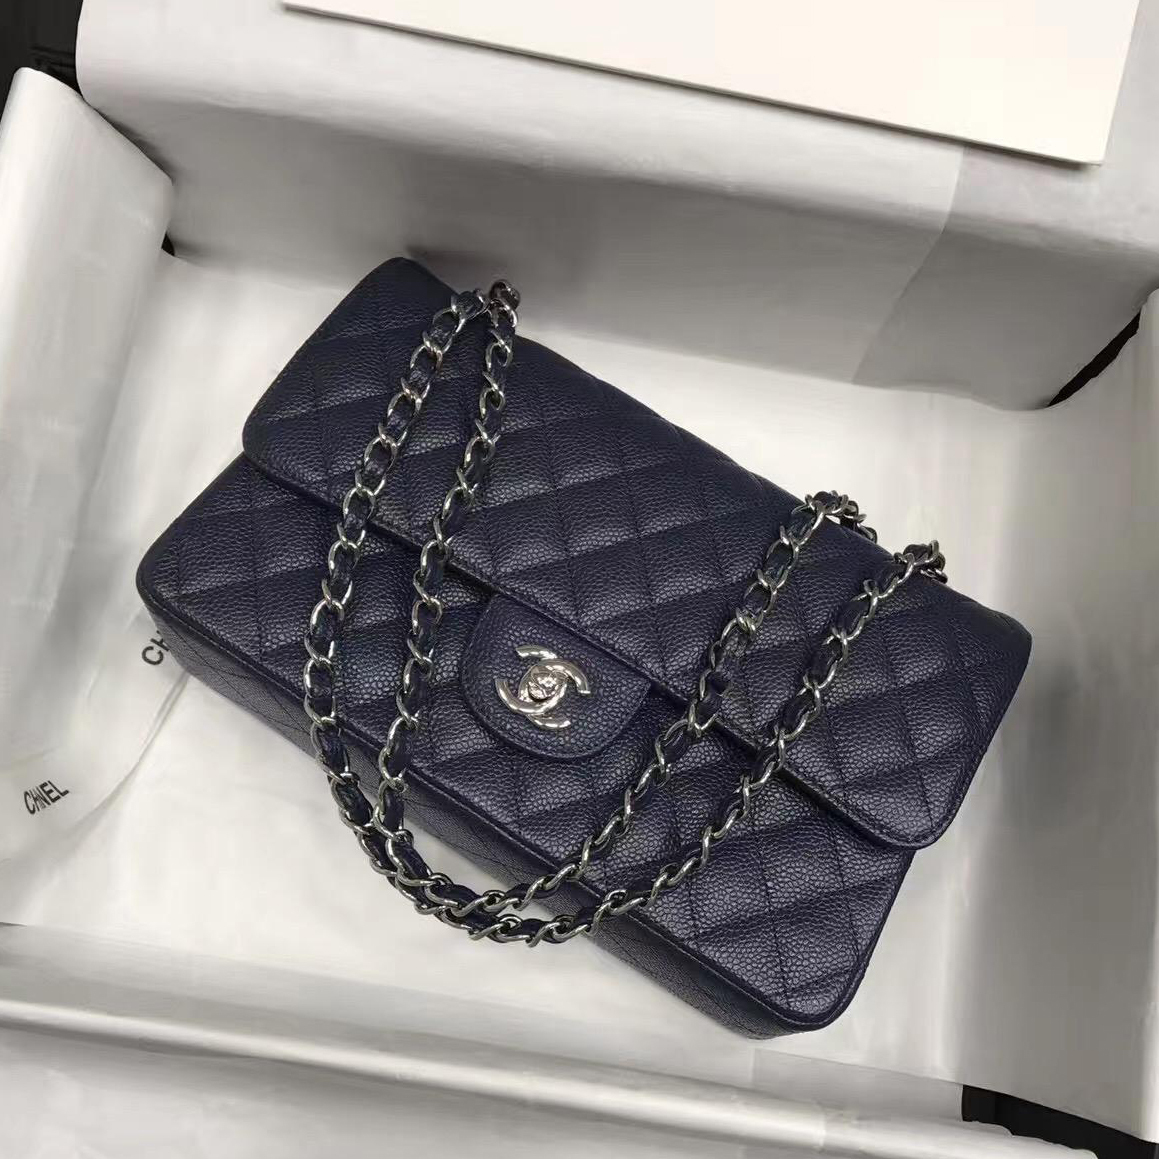 Chanel Handbag Australia | IQS Executive